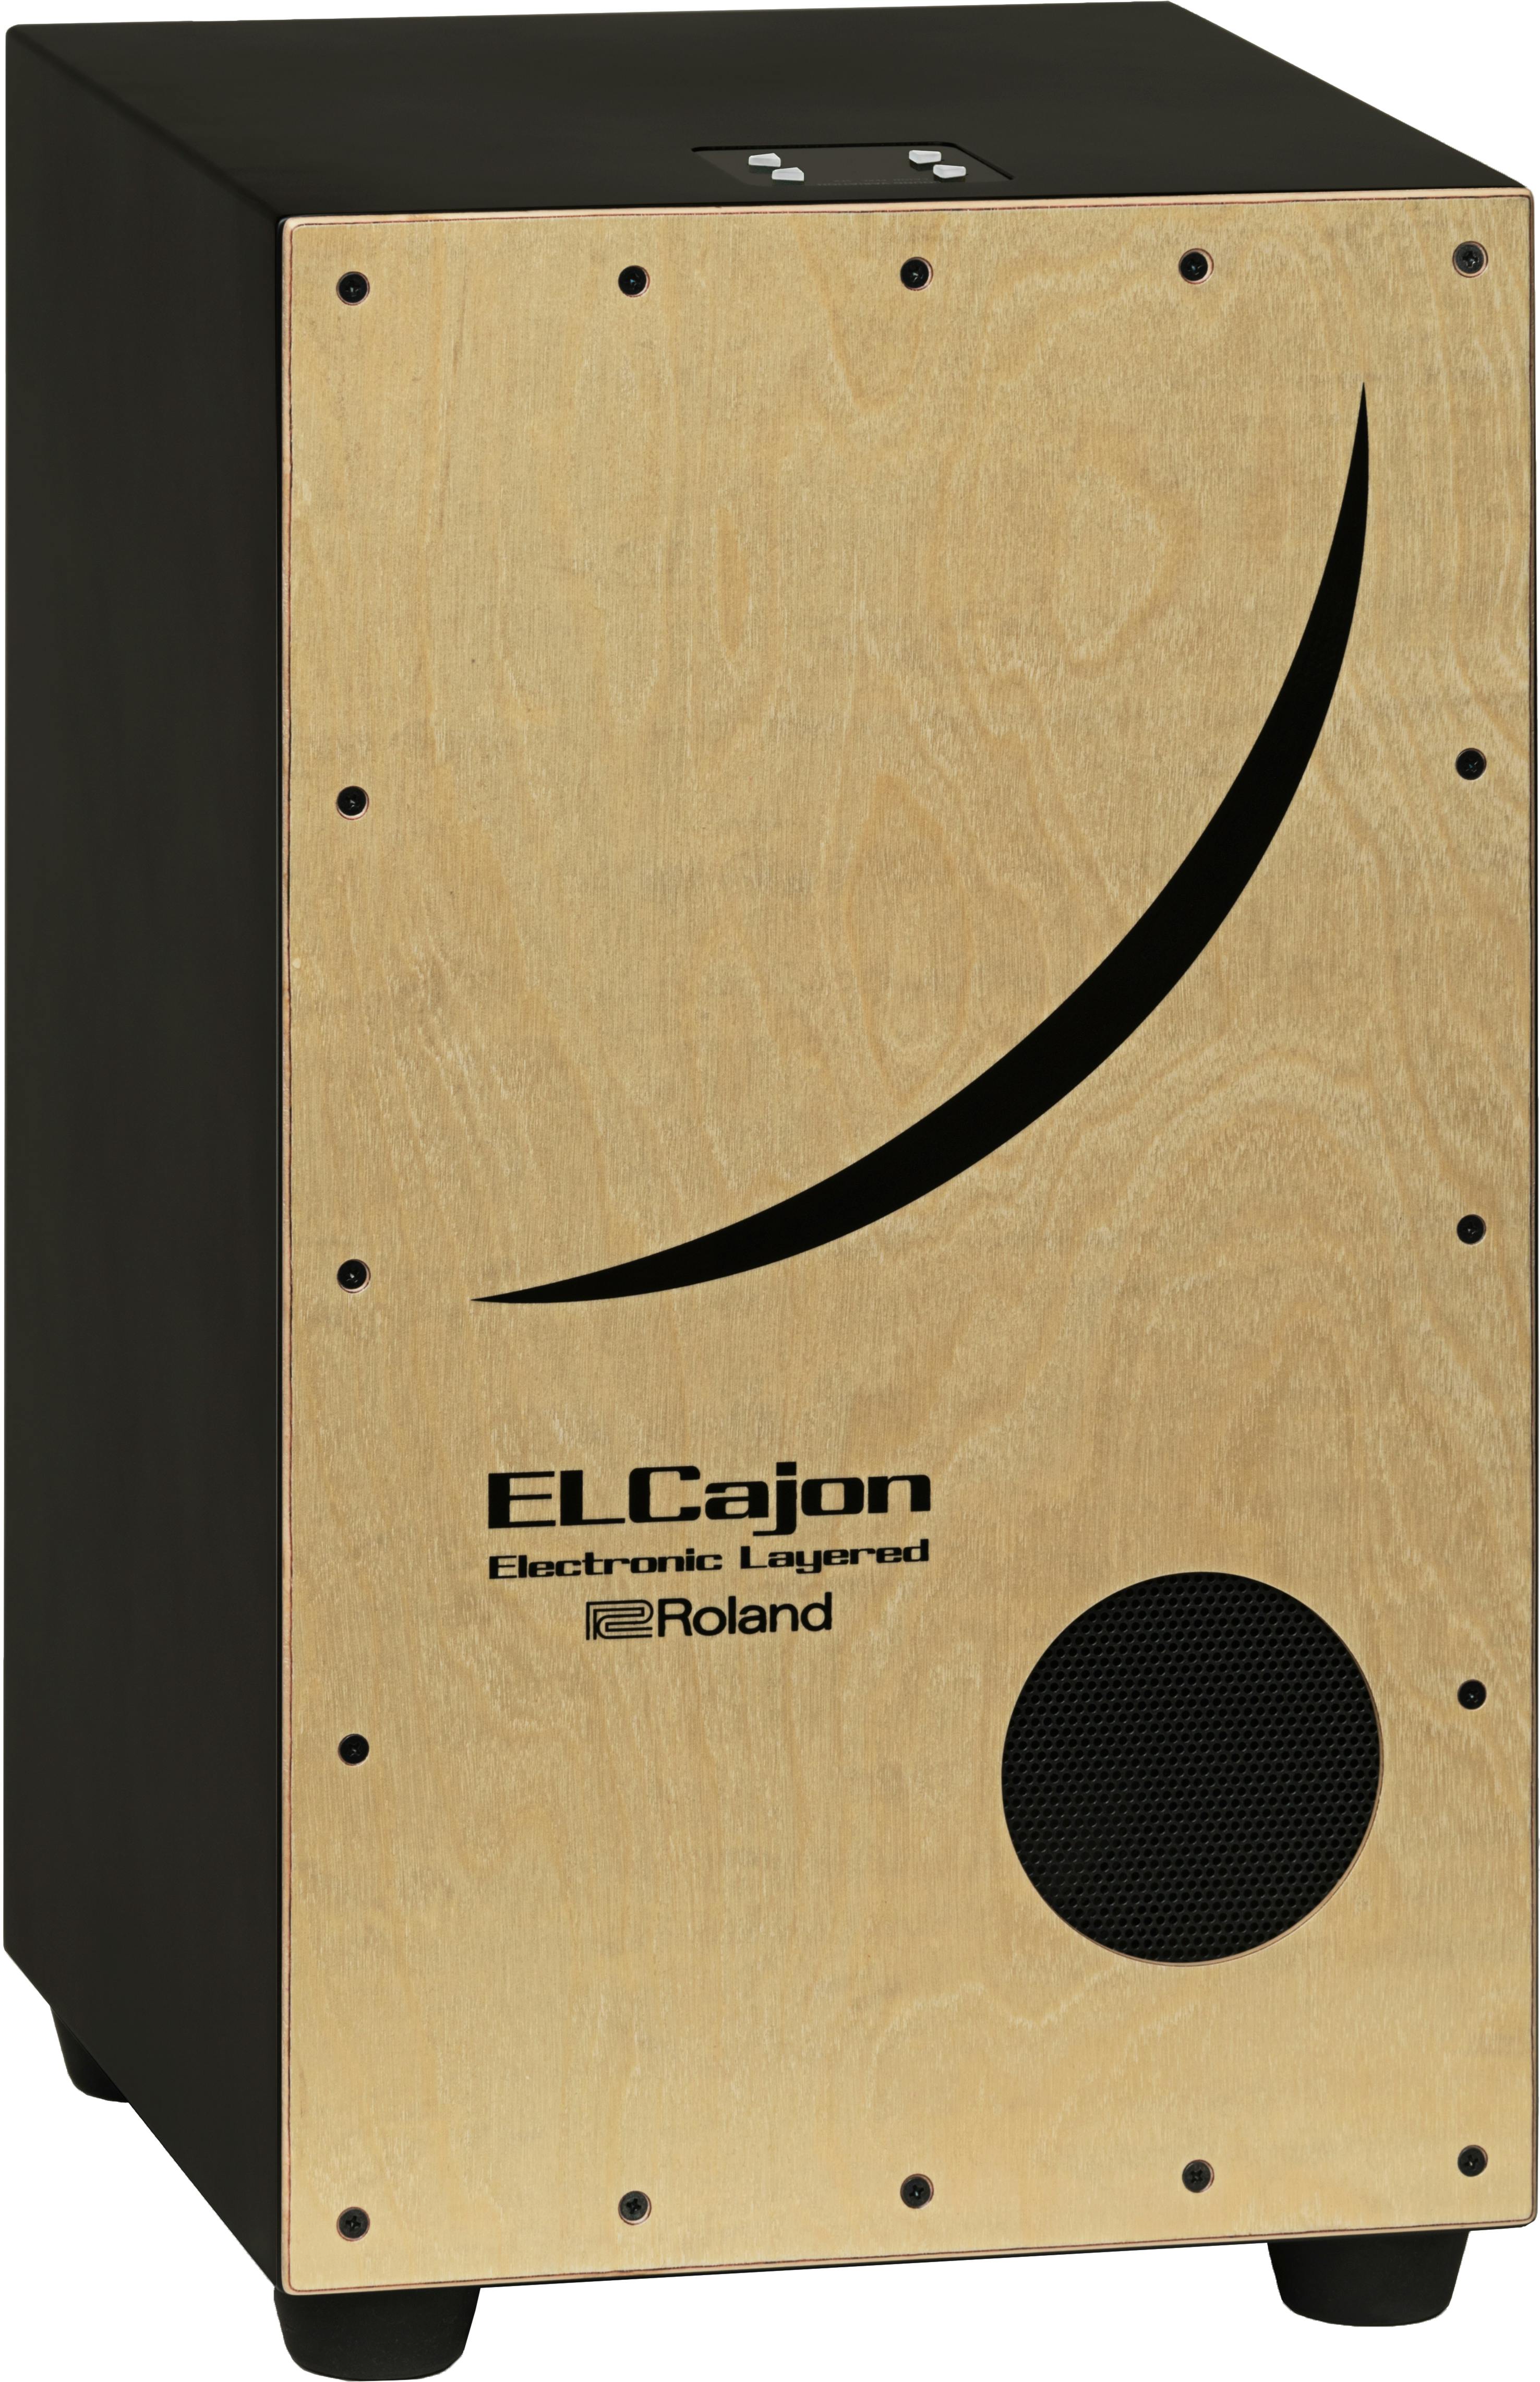 Roland EC10 El Cajon Hybrid Cajon with Layered Electronic